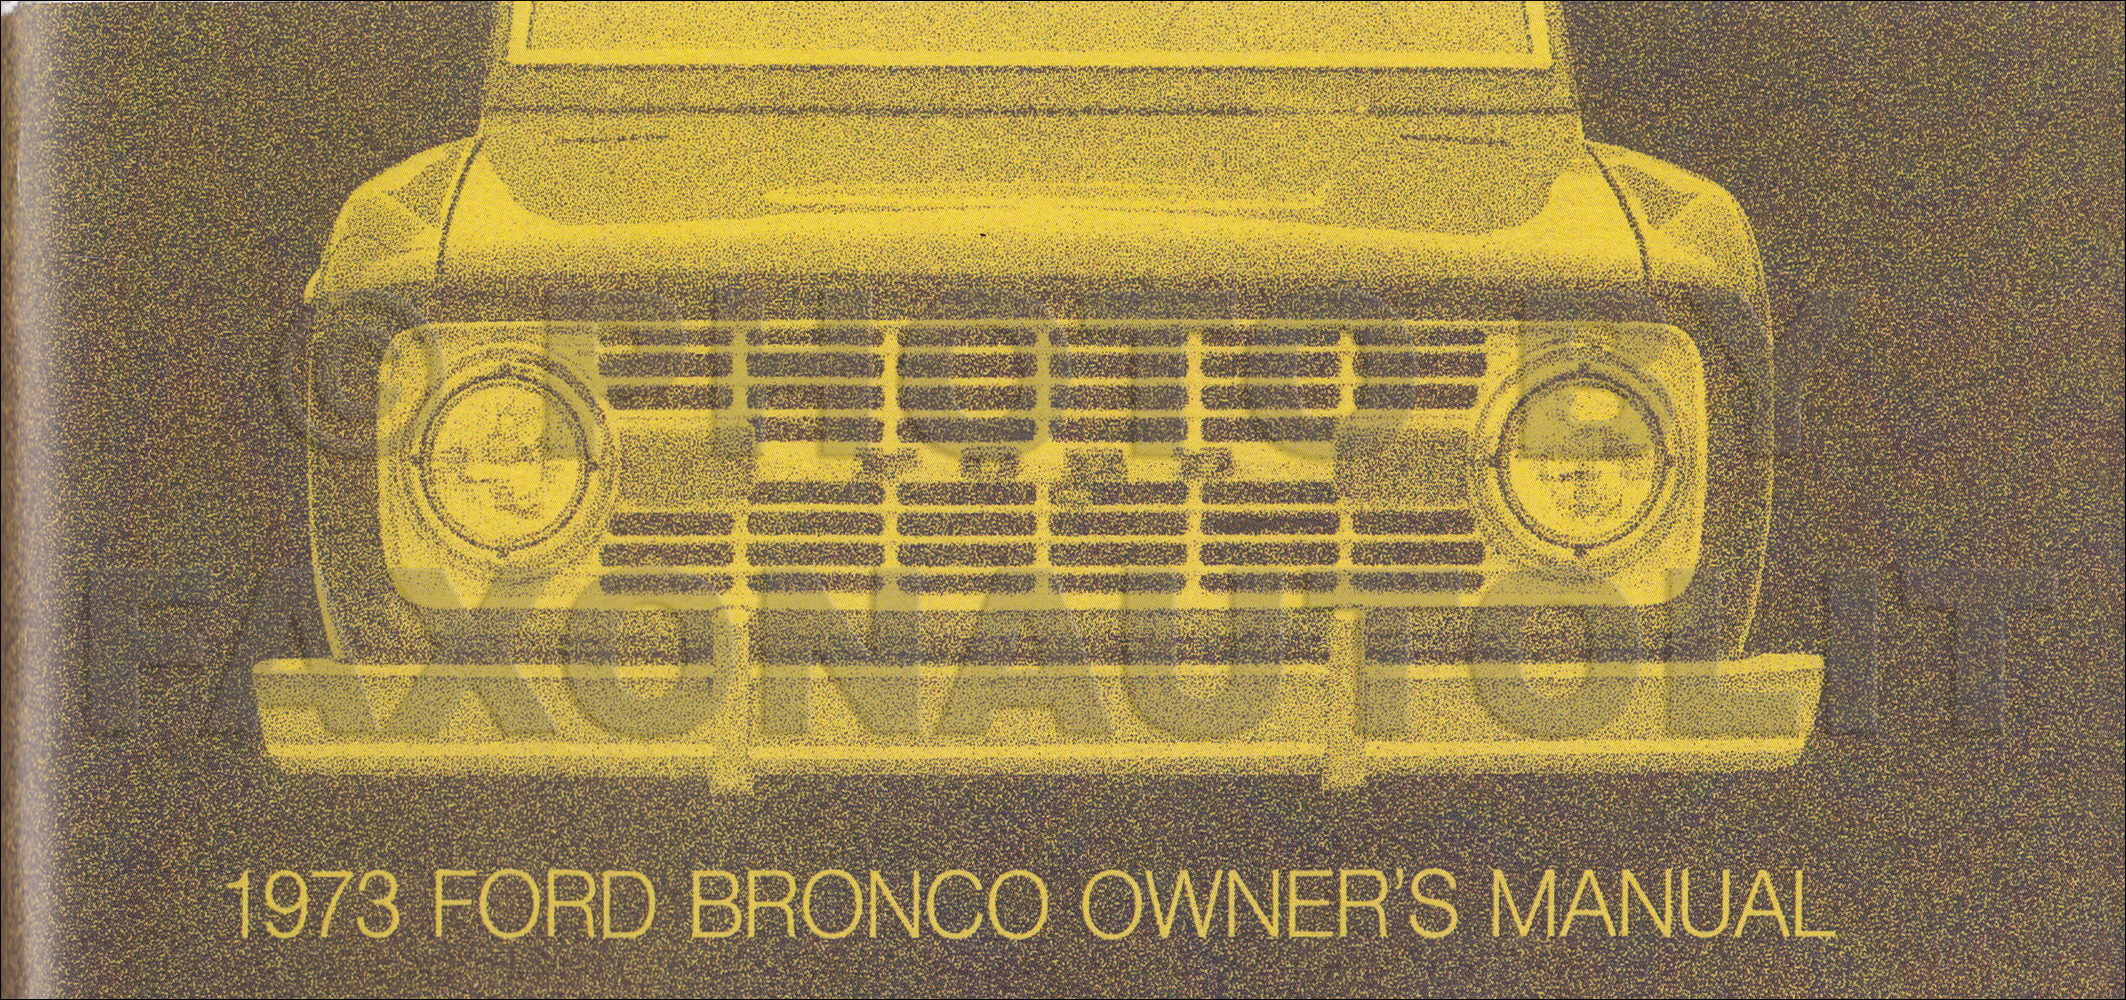 1973 Ford Bronco Owner's Manual Reprint